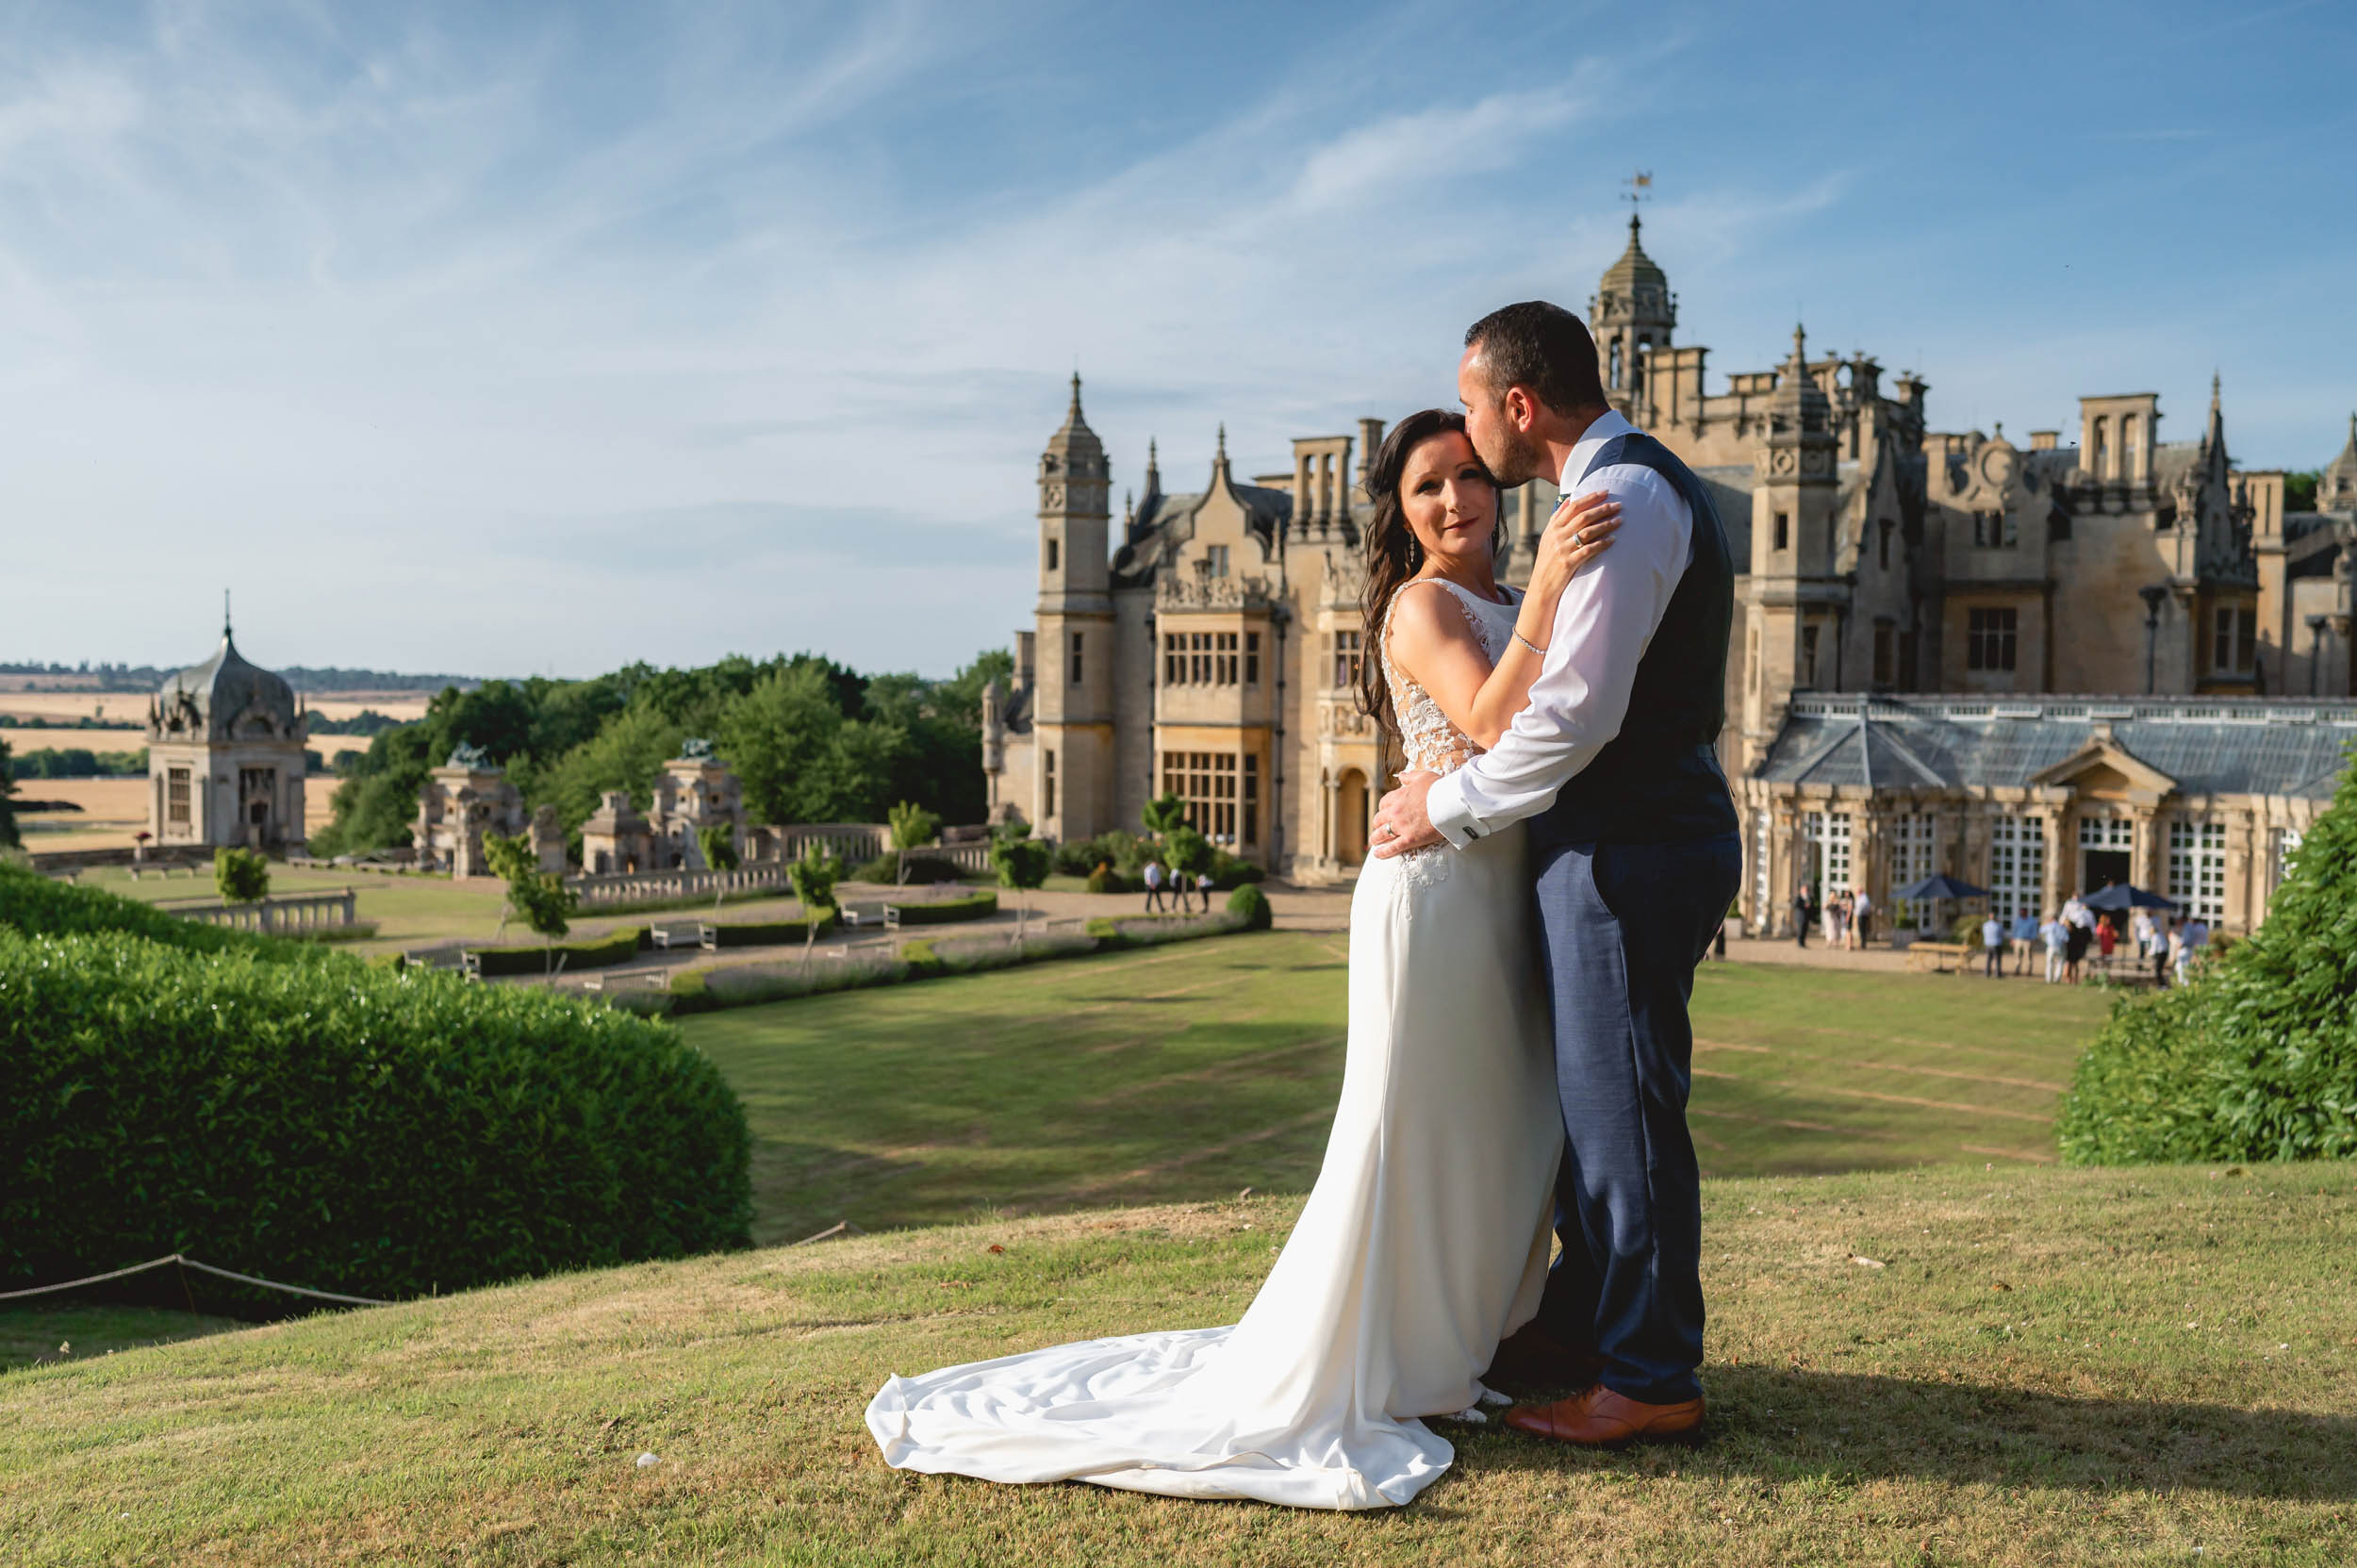 Harlaxton Manor wedding – Jessica & Peter